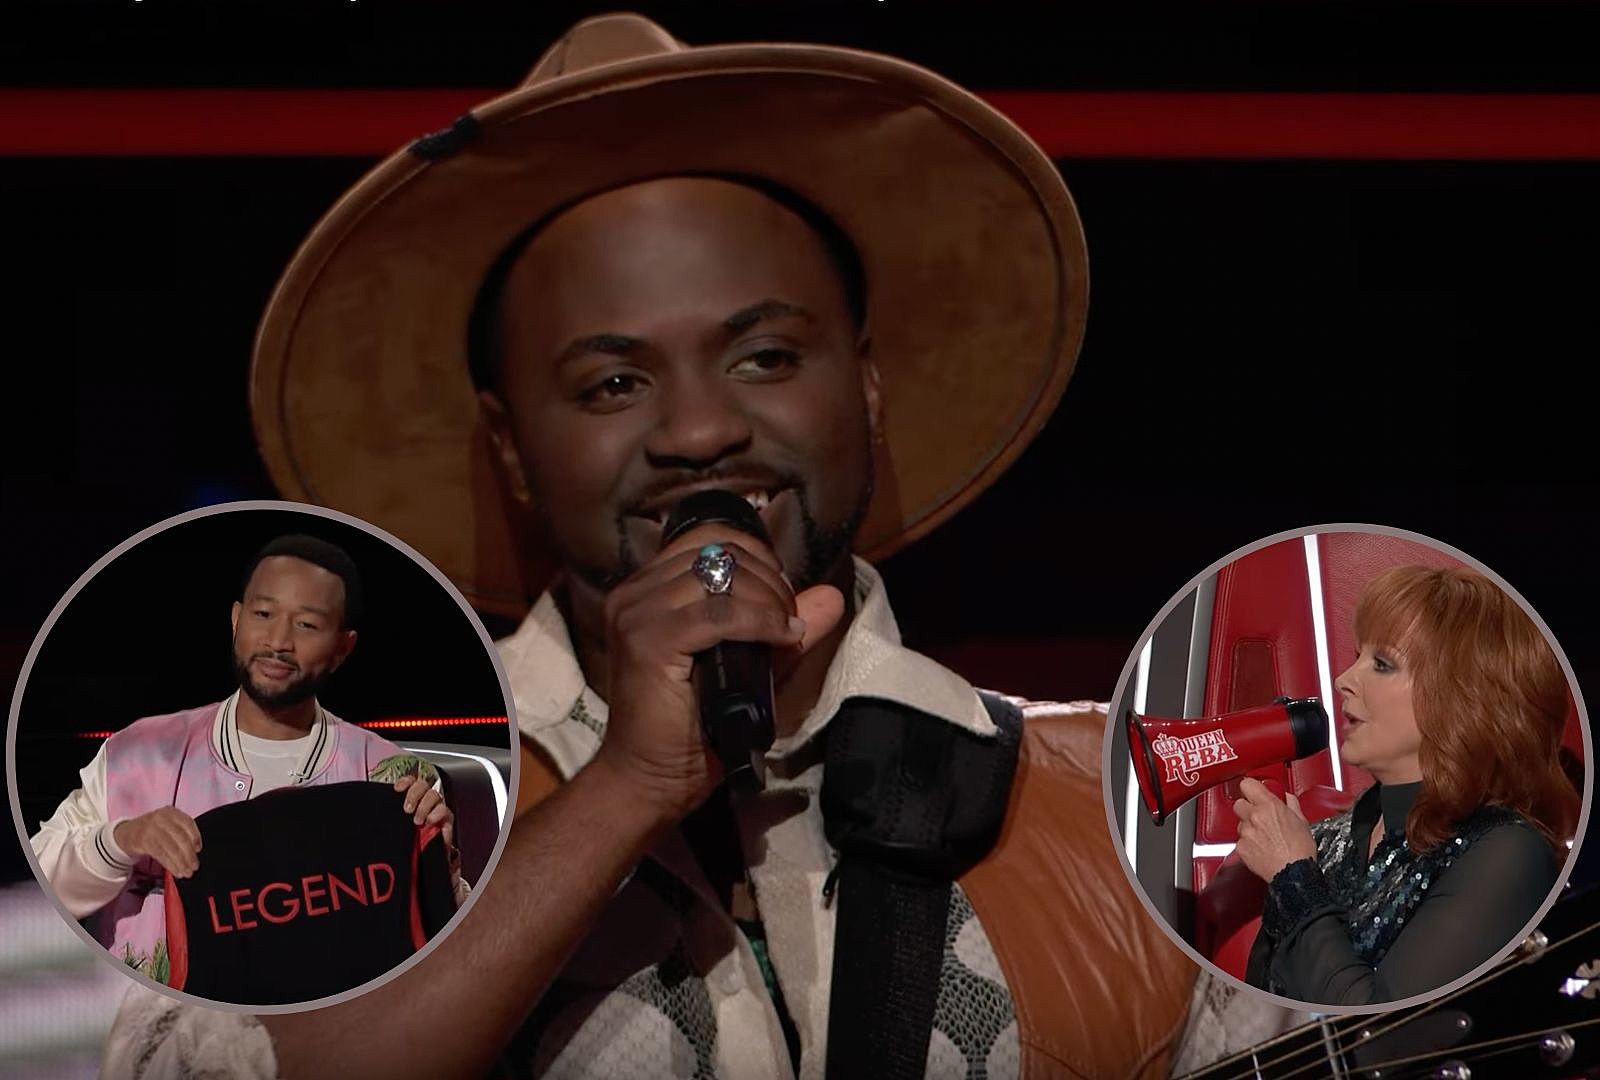 Reba McEntire + John Legend Duke It Out Over ‘The Voice’
Contestant 